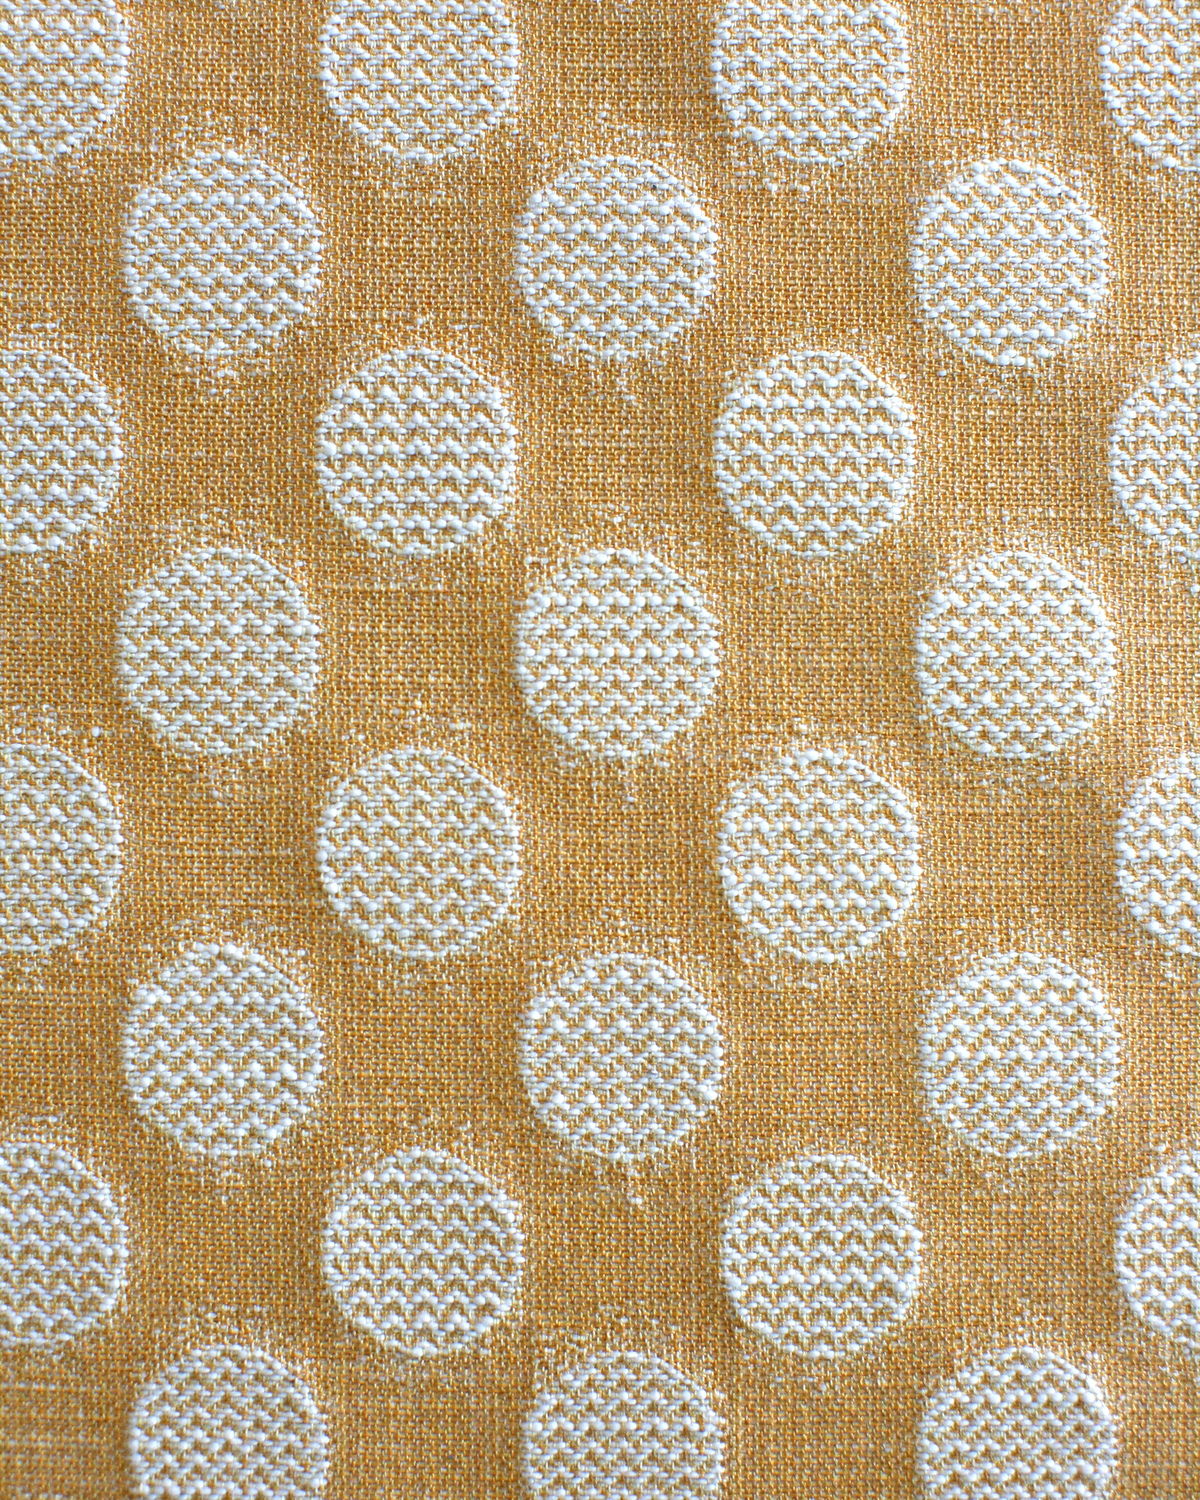 Chevron Dots Fabric in Goldenrod